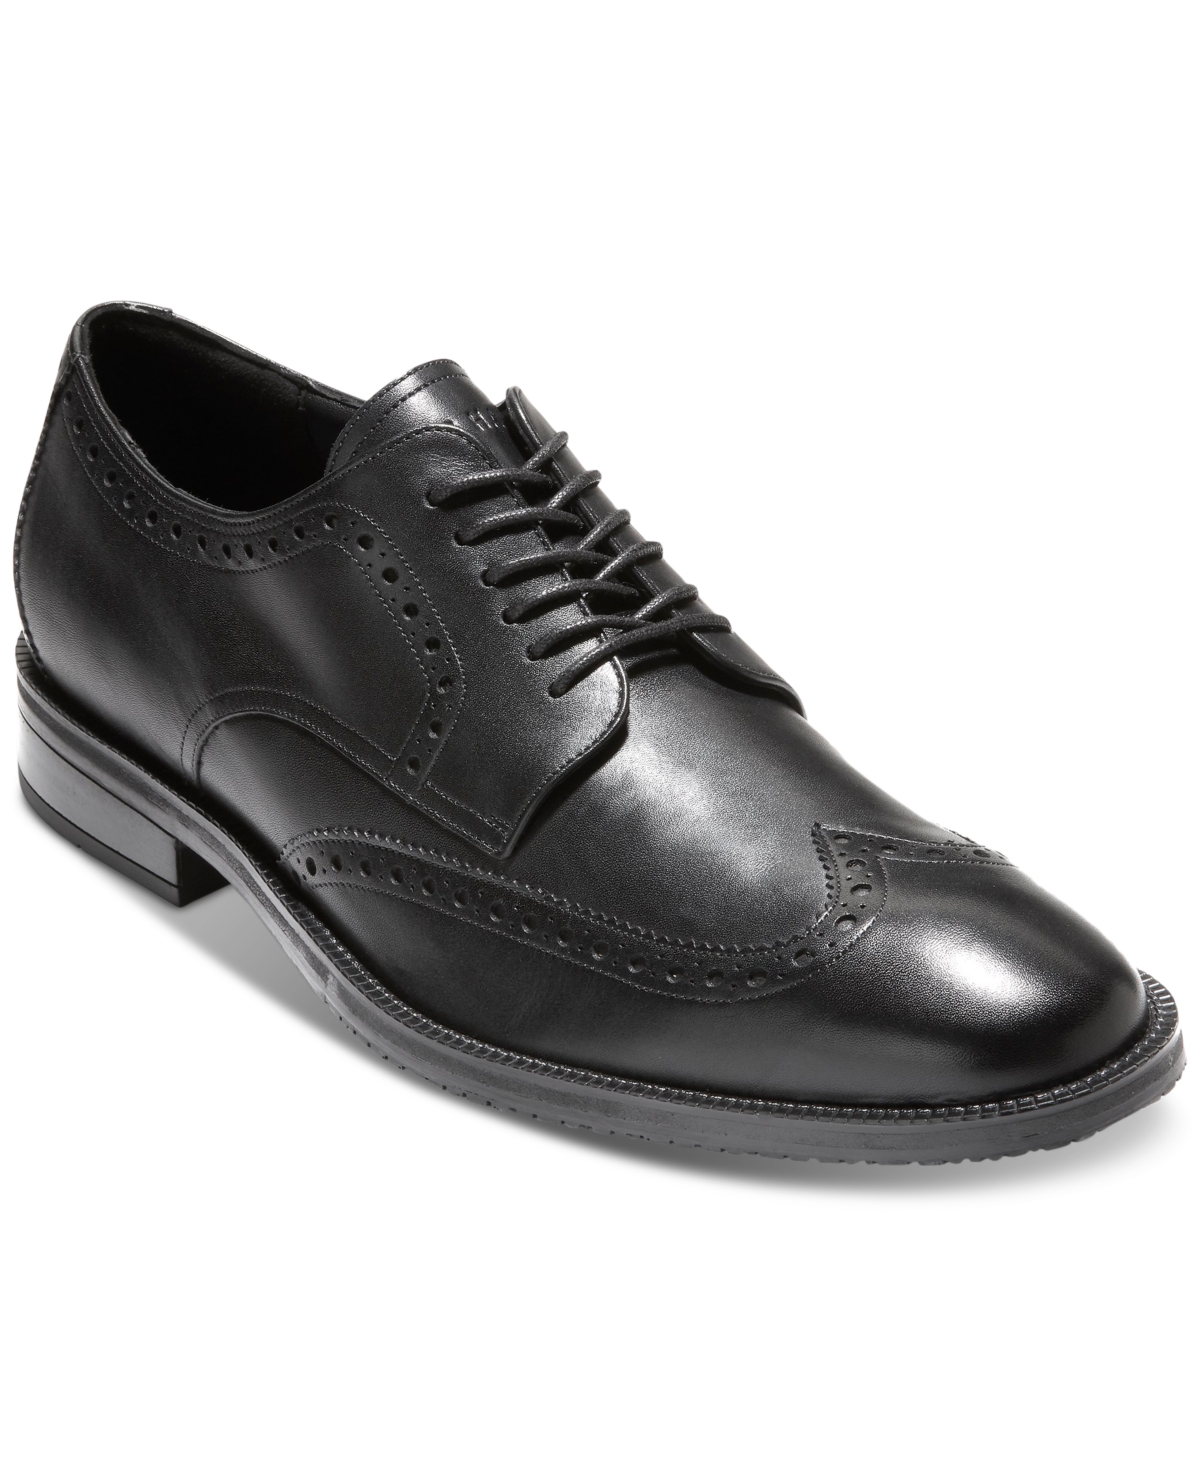 Men's Modern Essentials Wing Oxford Shoes - Black Waterproof